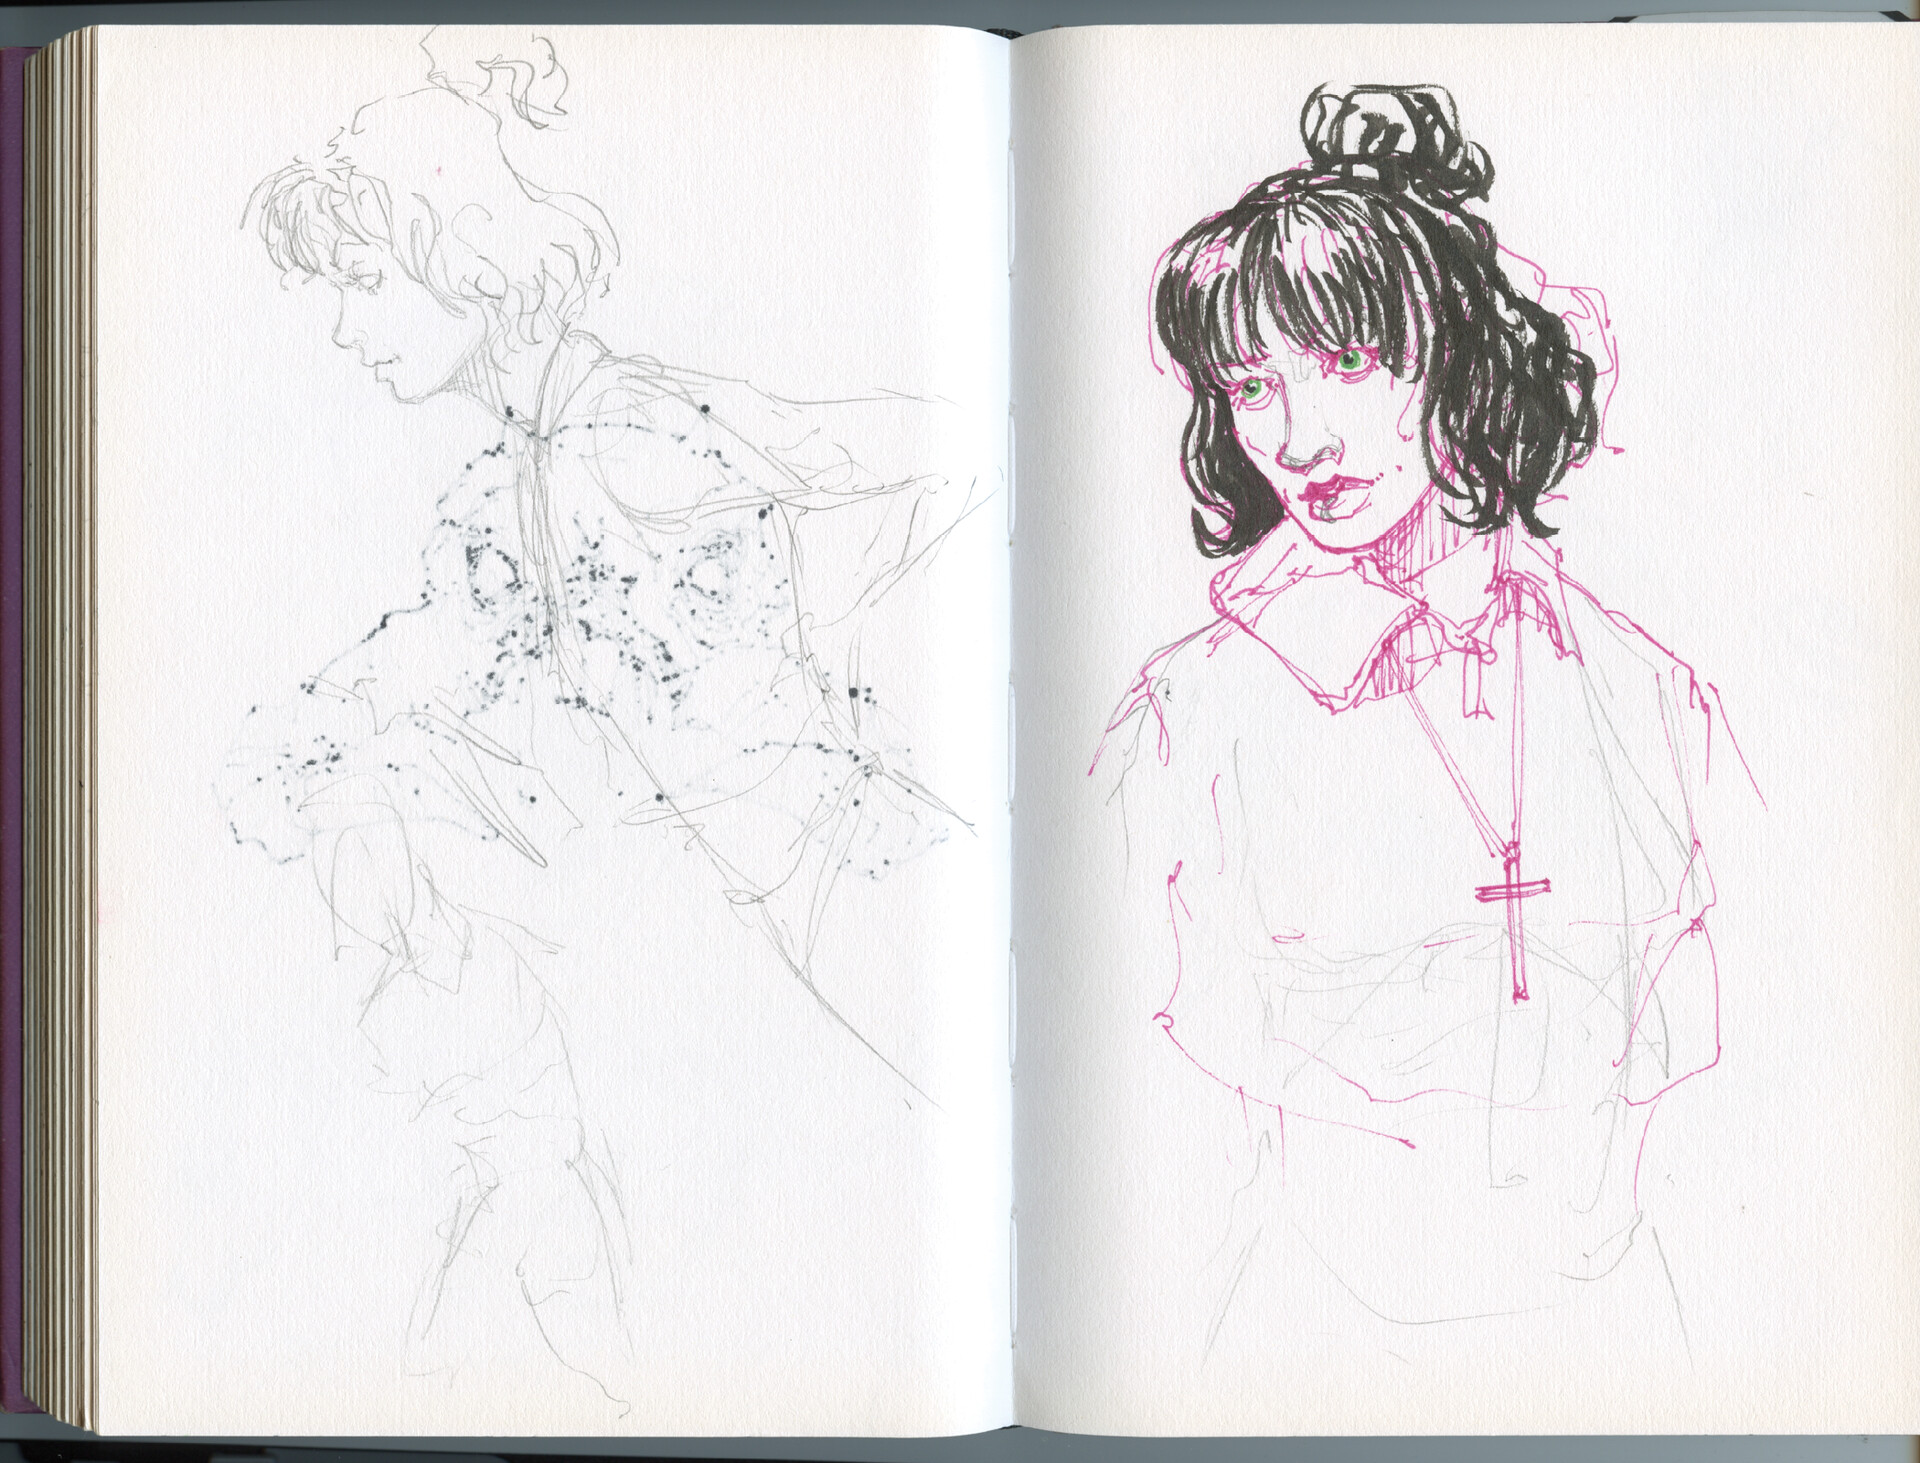 ArtStation - Moleskine sketchbook art #3